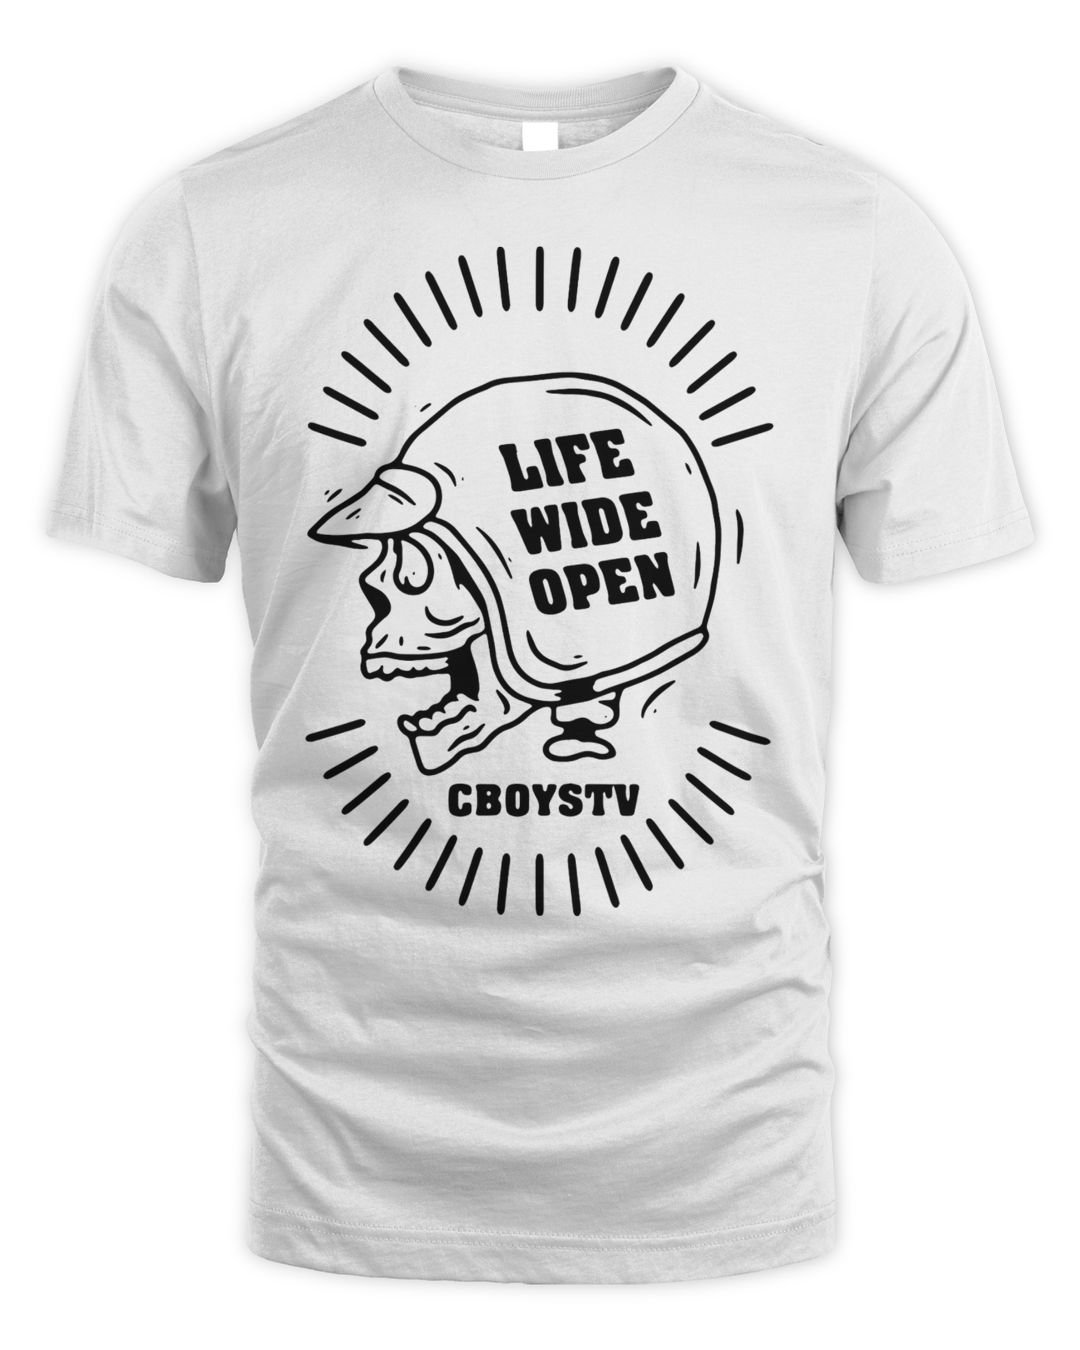 Official Life wide open cboystv T-shirt | SenPrints